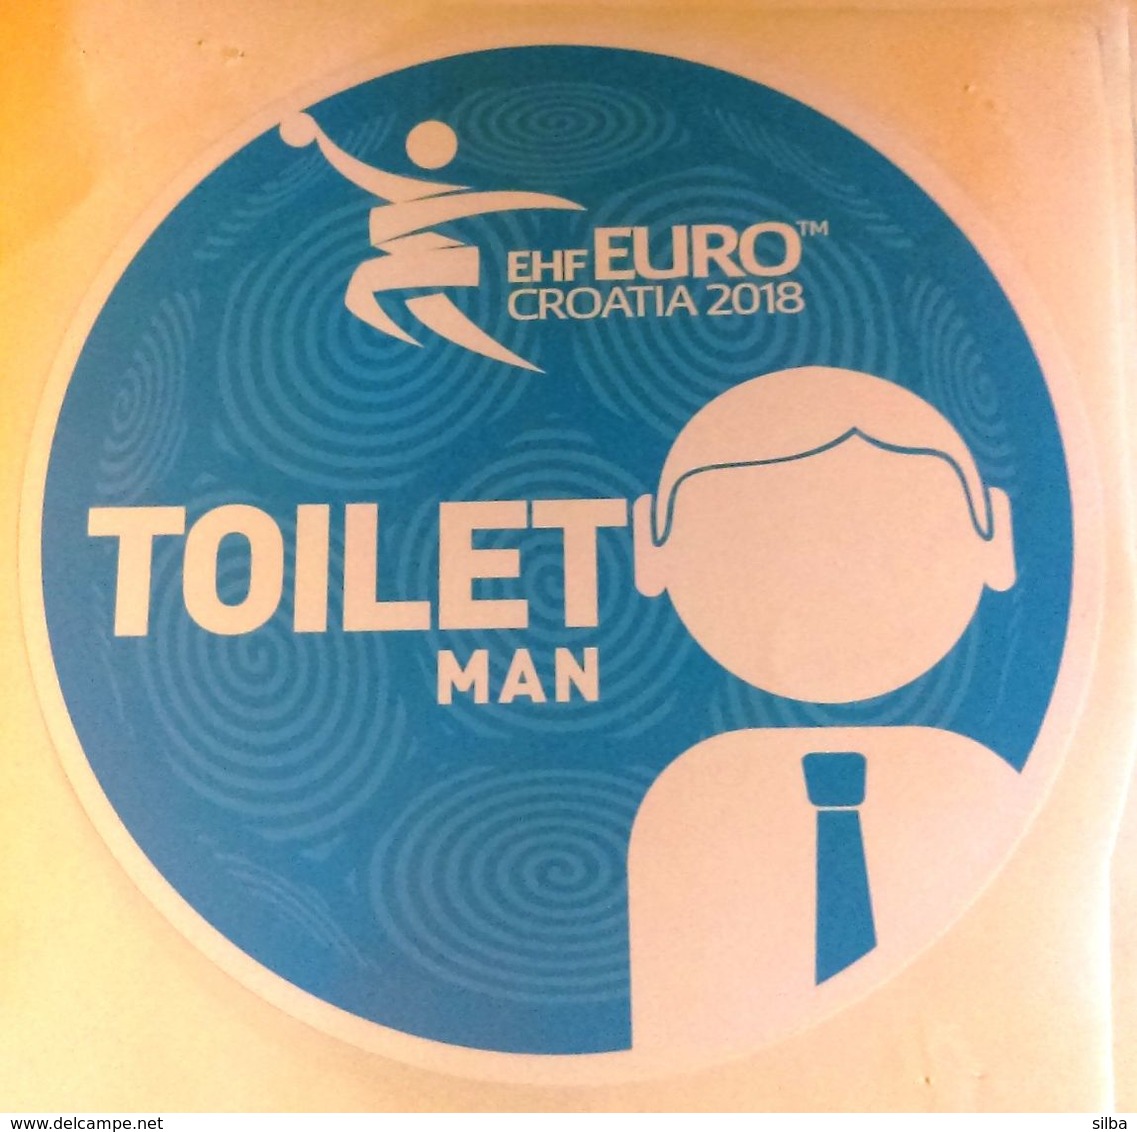 HANDBALL / MEN'S EHF EURO CROATIA 2018 / Main Official Sticker / TOILET MAN - Handbal